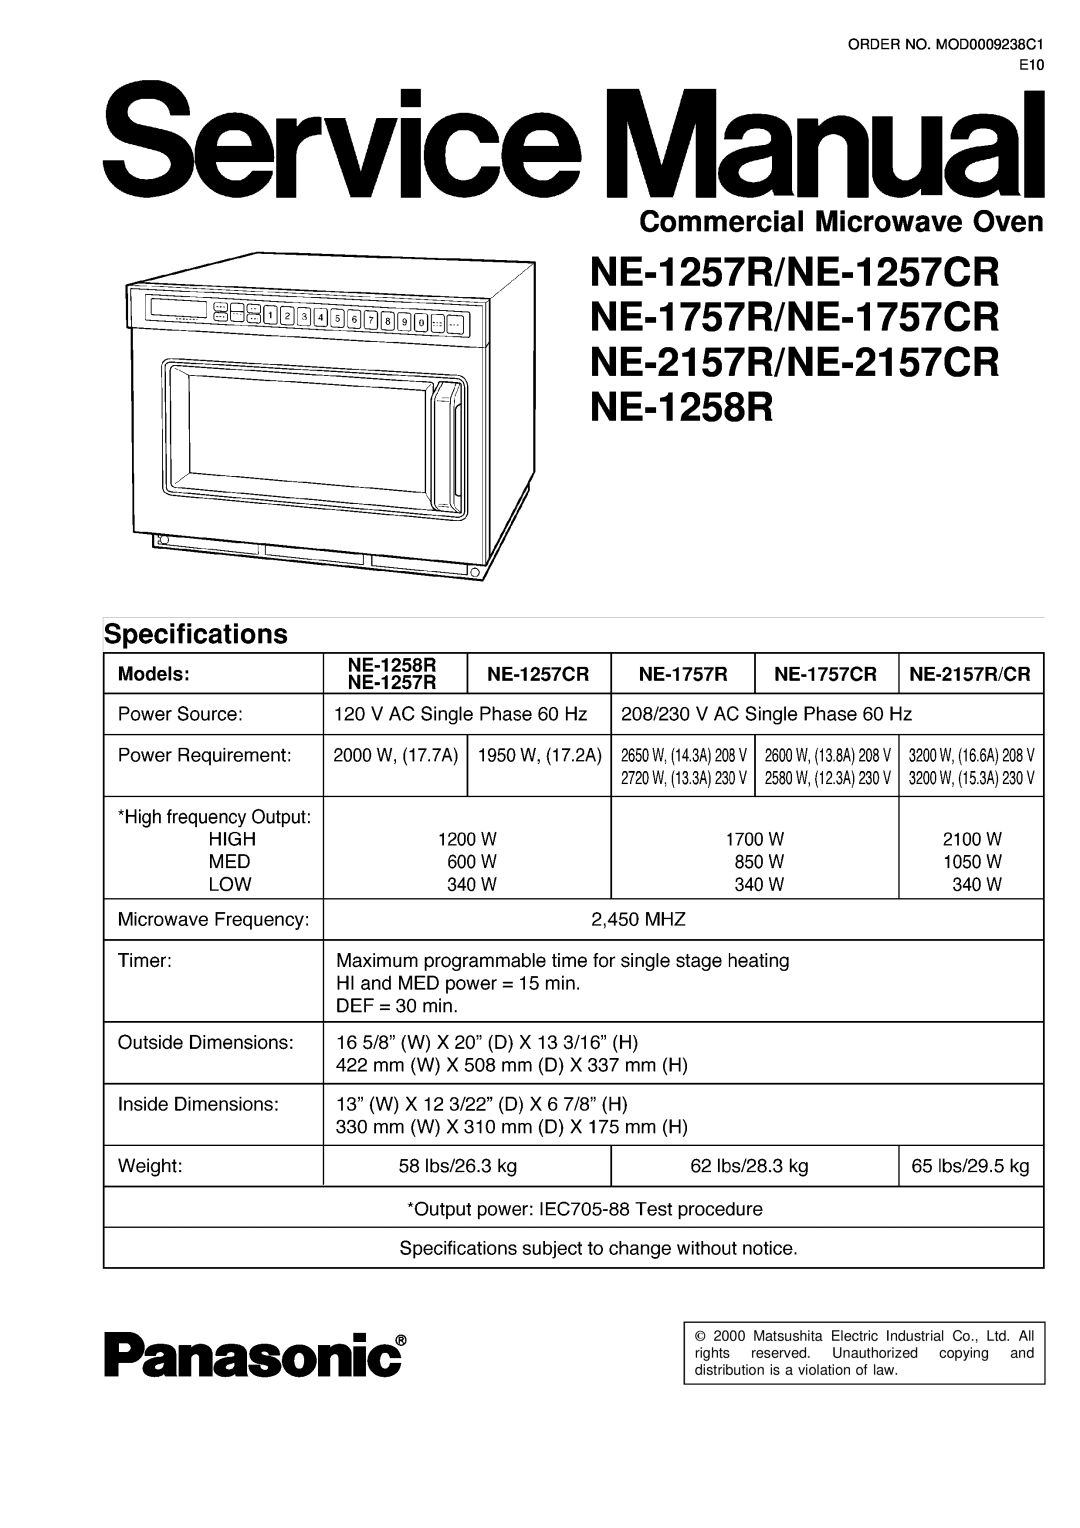 Panasonic NE-1757CR, NE-2157CR, NE-1257CR manual Commercial Microwave Oven, ORDER NO. MOD0009238C1 E10 